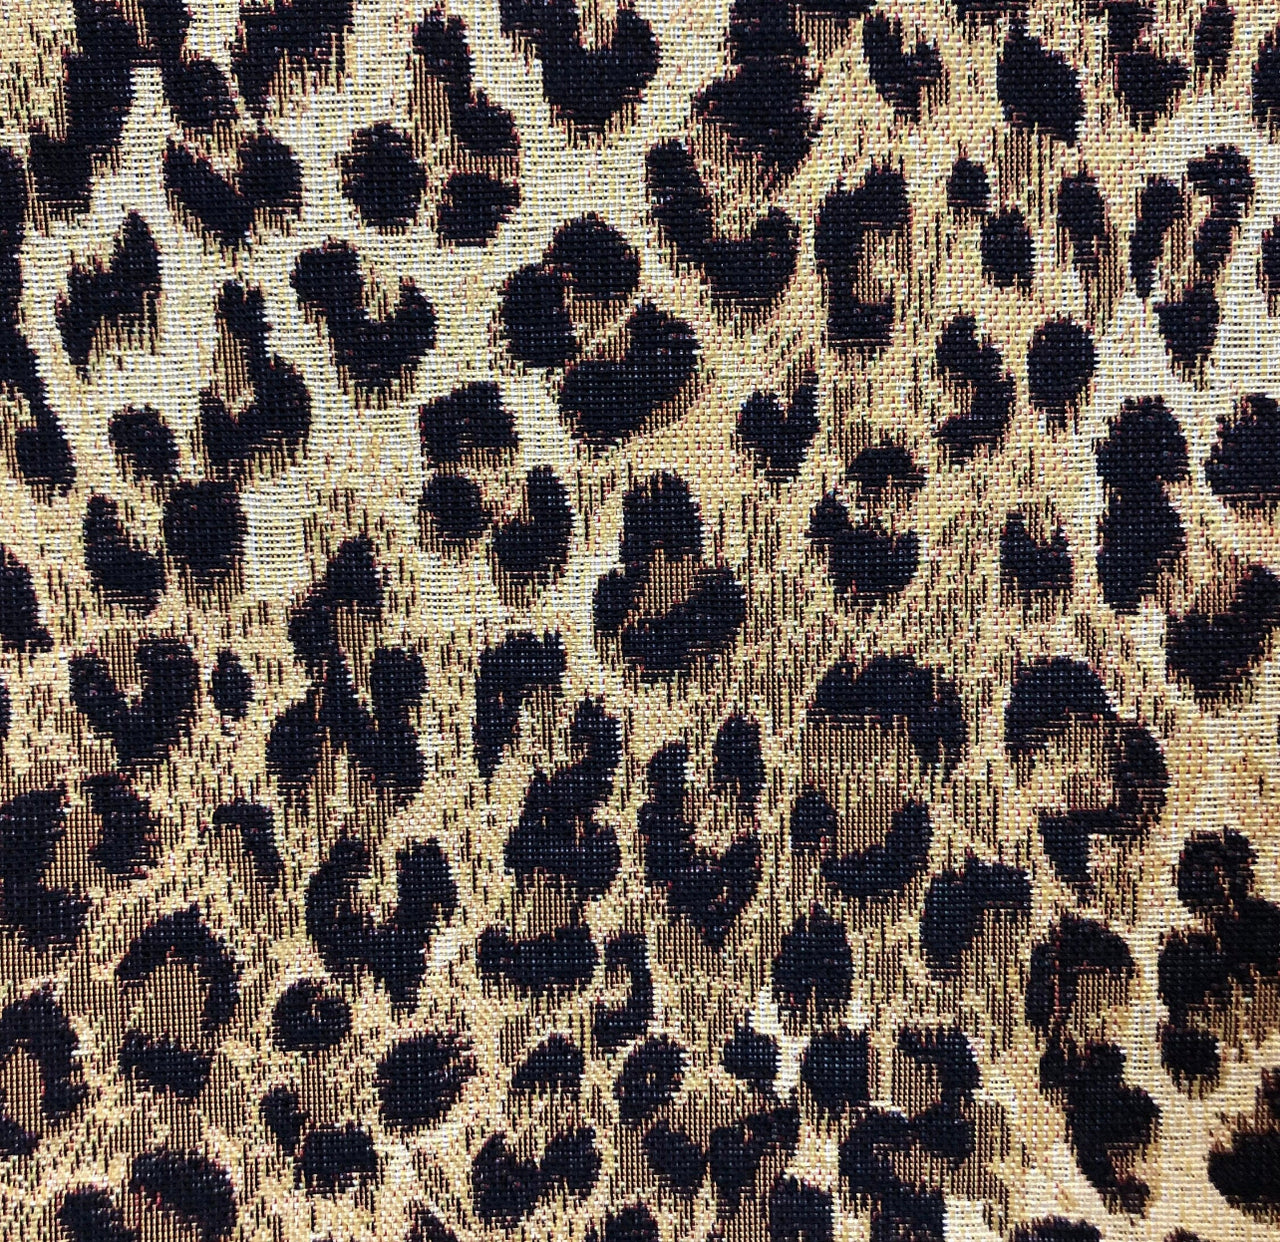 Leopard Skin Woven Fabric by the Meter Safari Anima Inspired